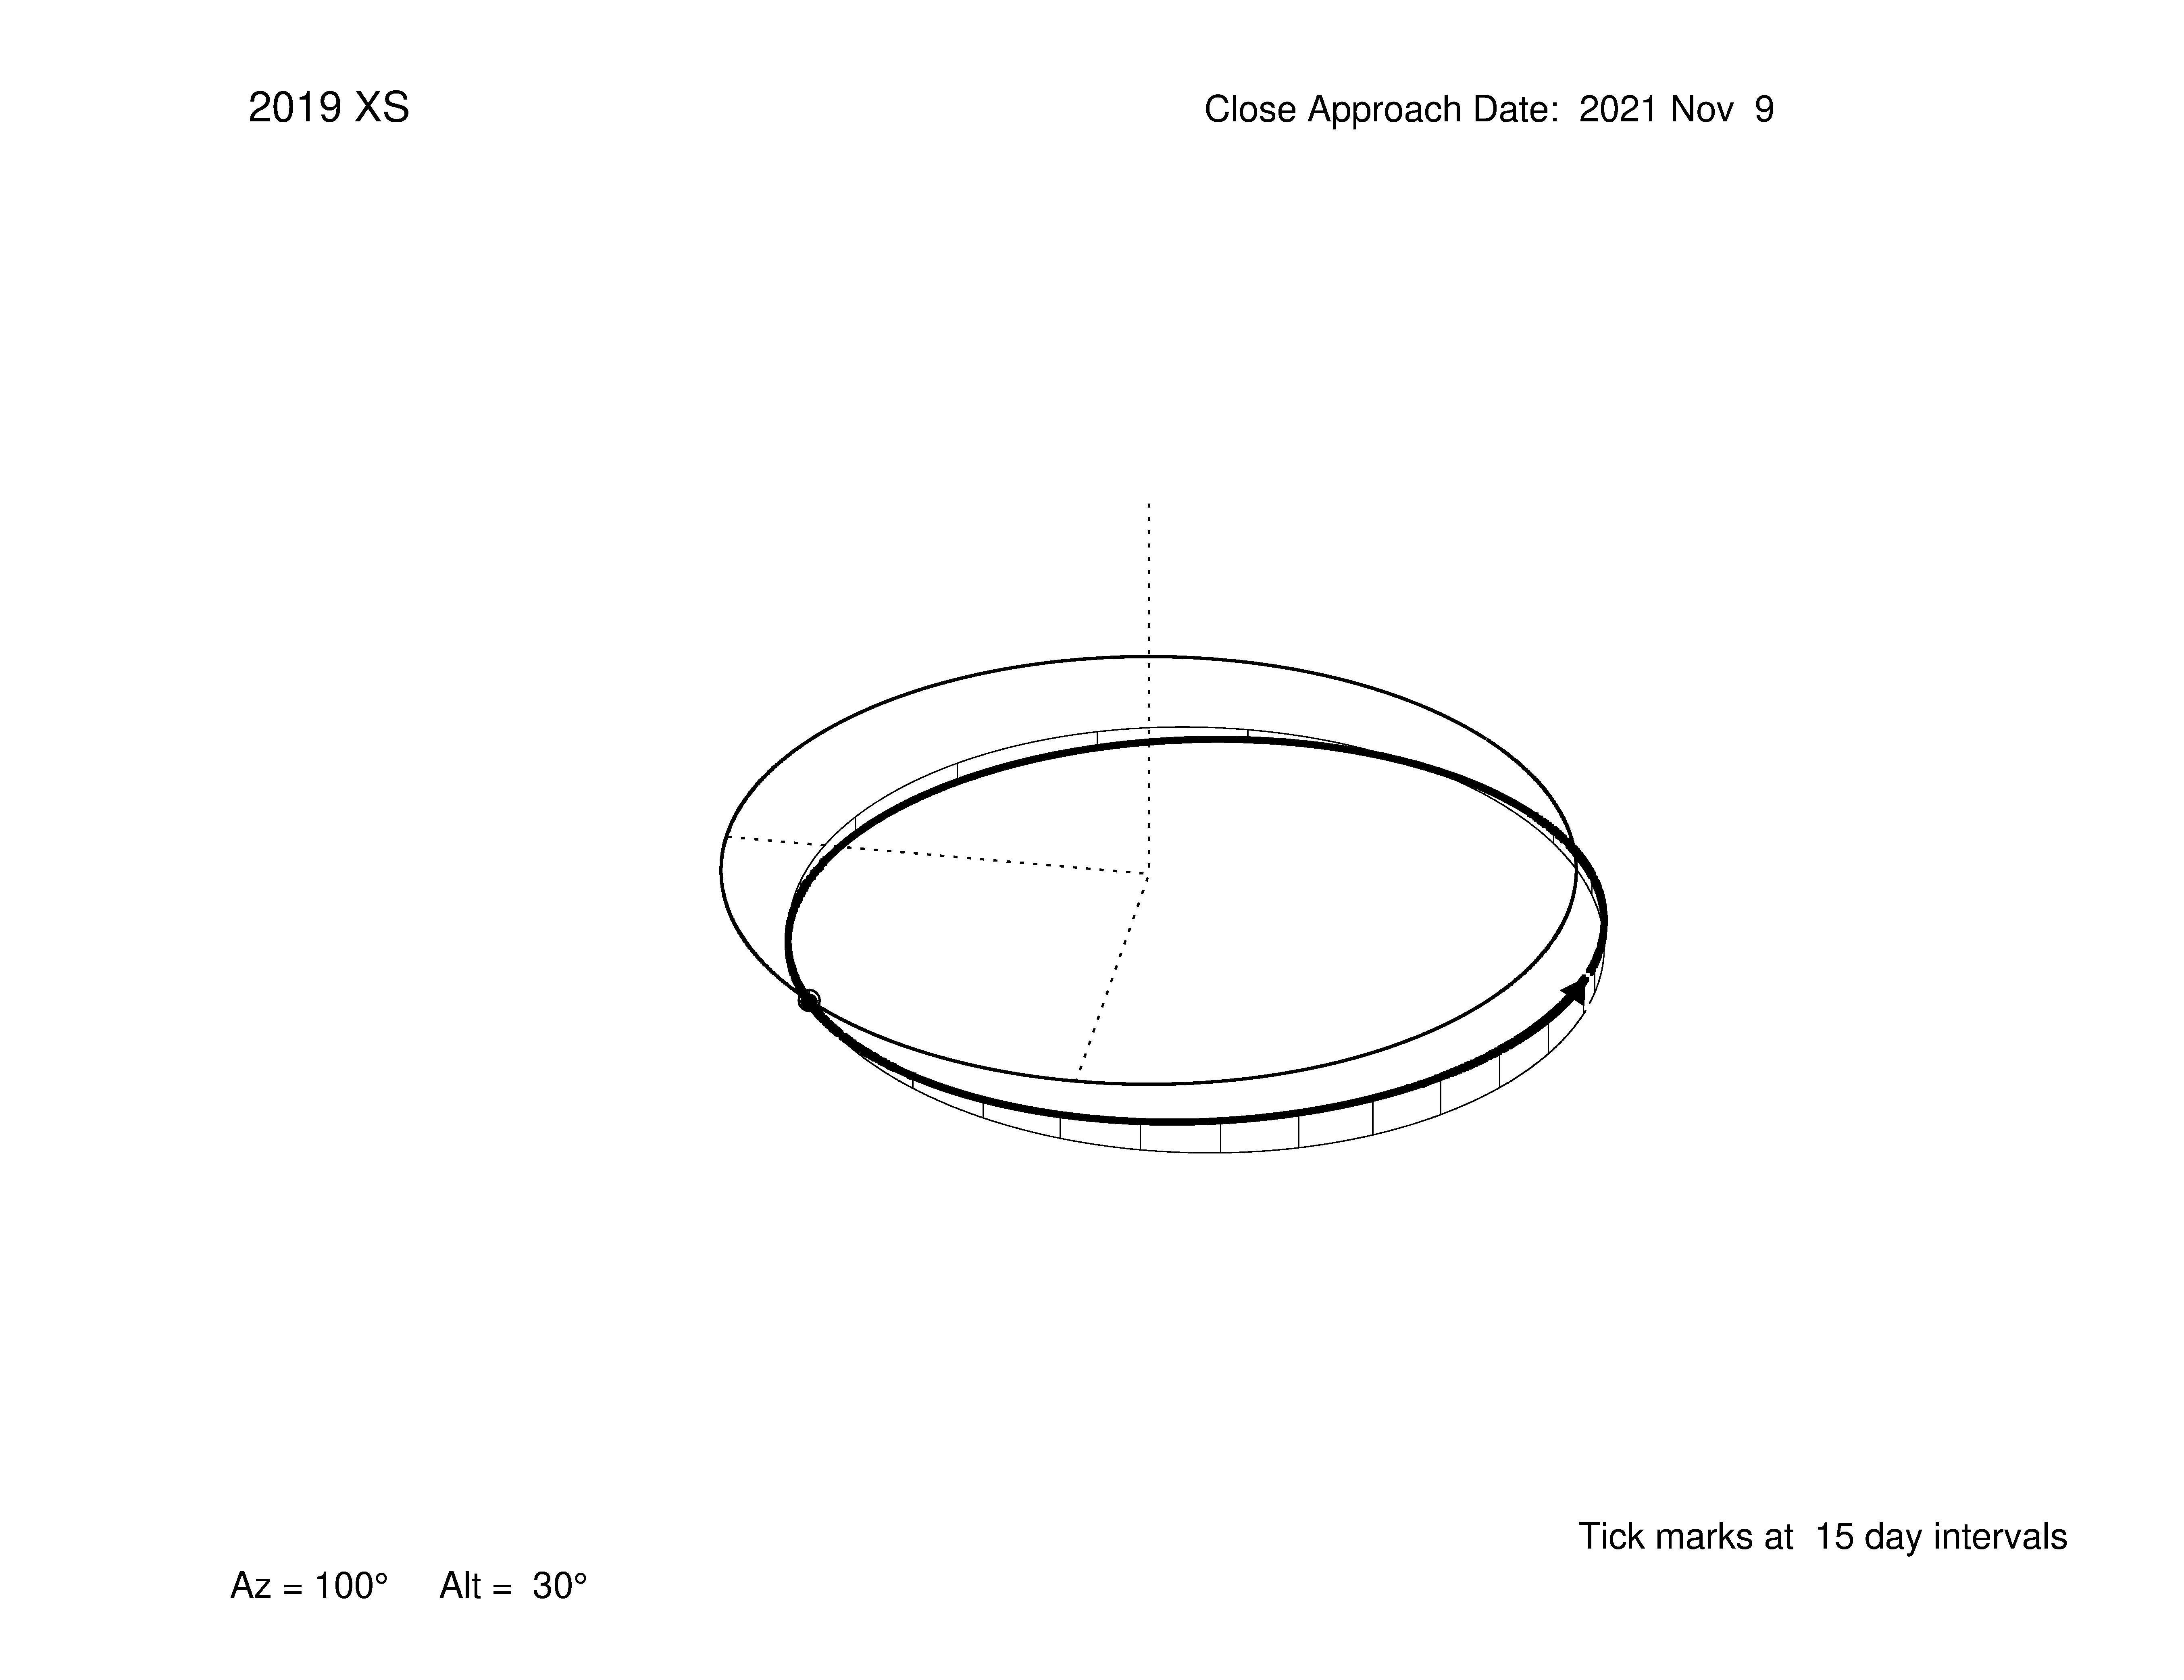 Oblique view of 2019 XS' orbit.